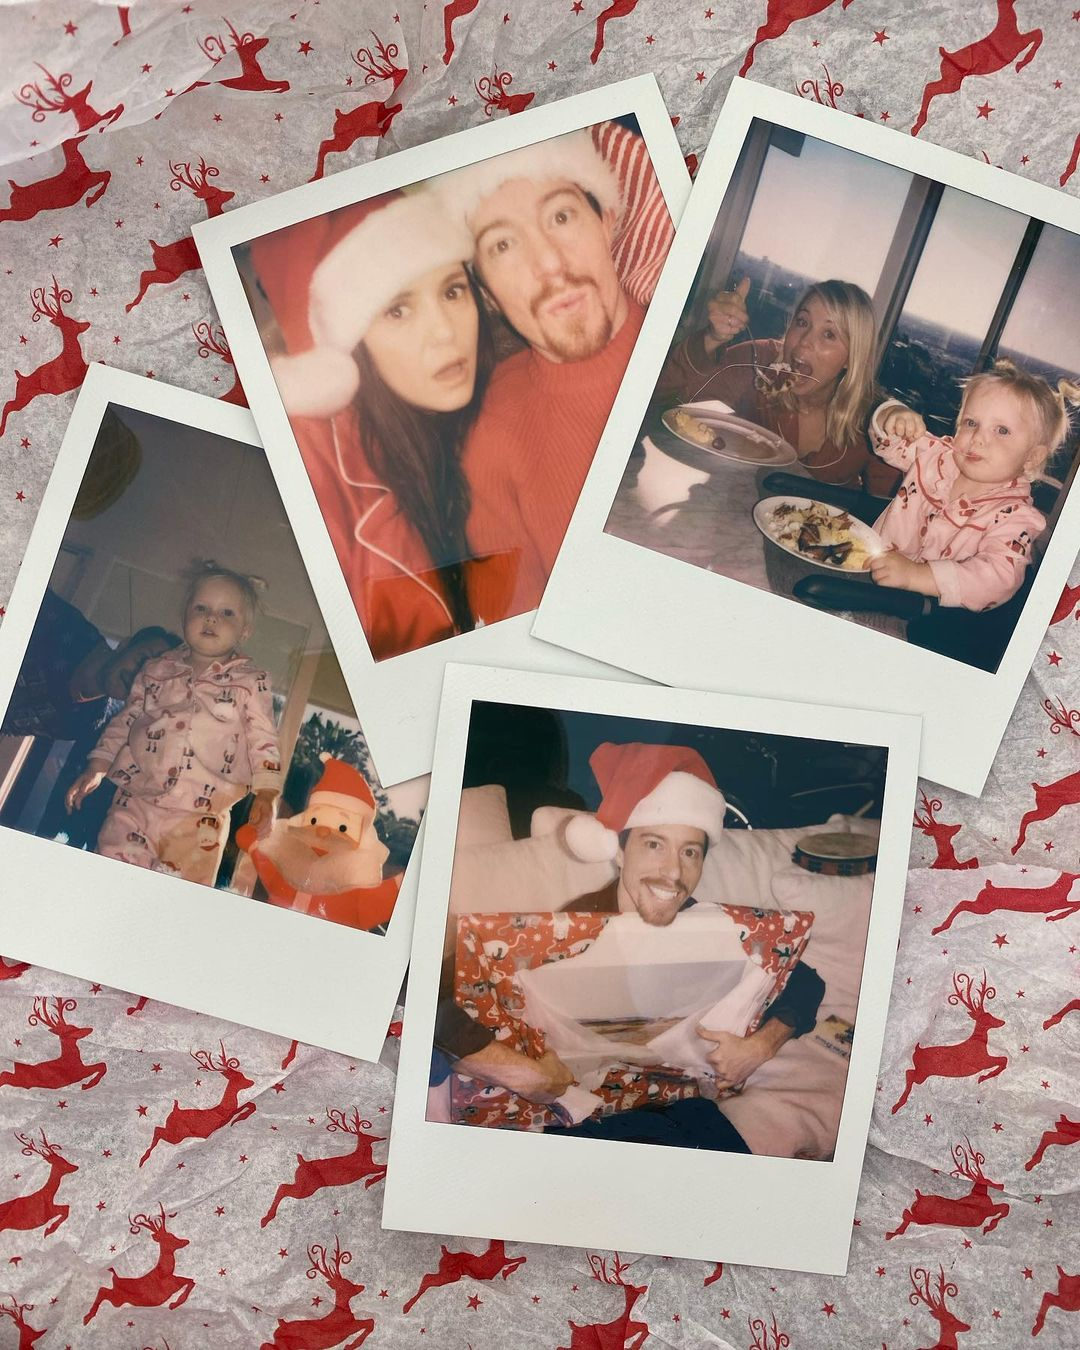 Nina Dobrev and Shaun White Enjoyed a Combined Family Christmas in